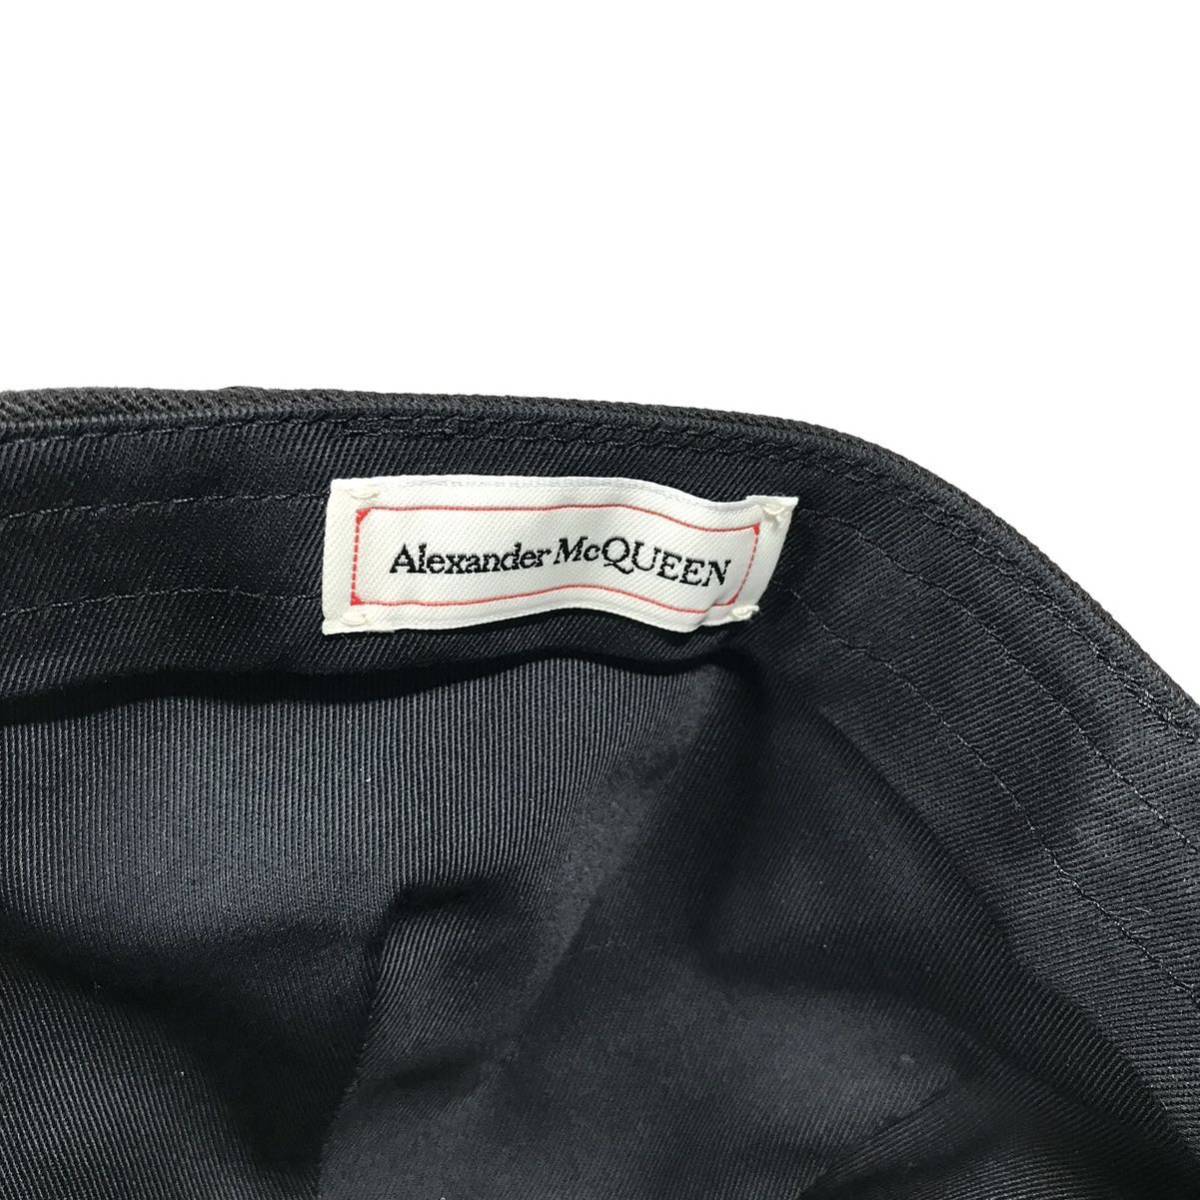 [ Alexander McQueen ] genuine article Alexander McQUEEN Baseball cap black Logo size M/58 cotton hat men's lady's made in Italy 